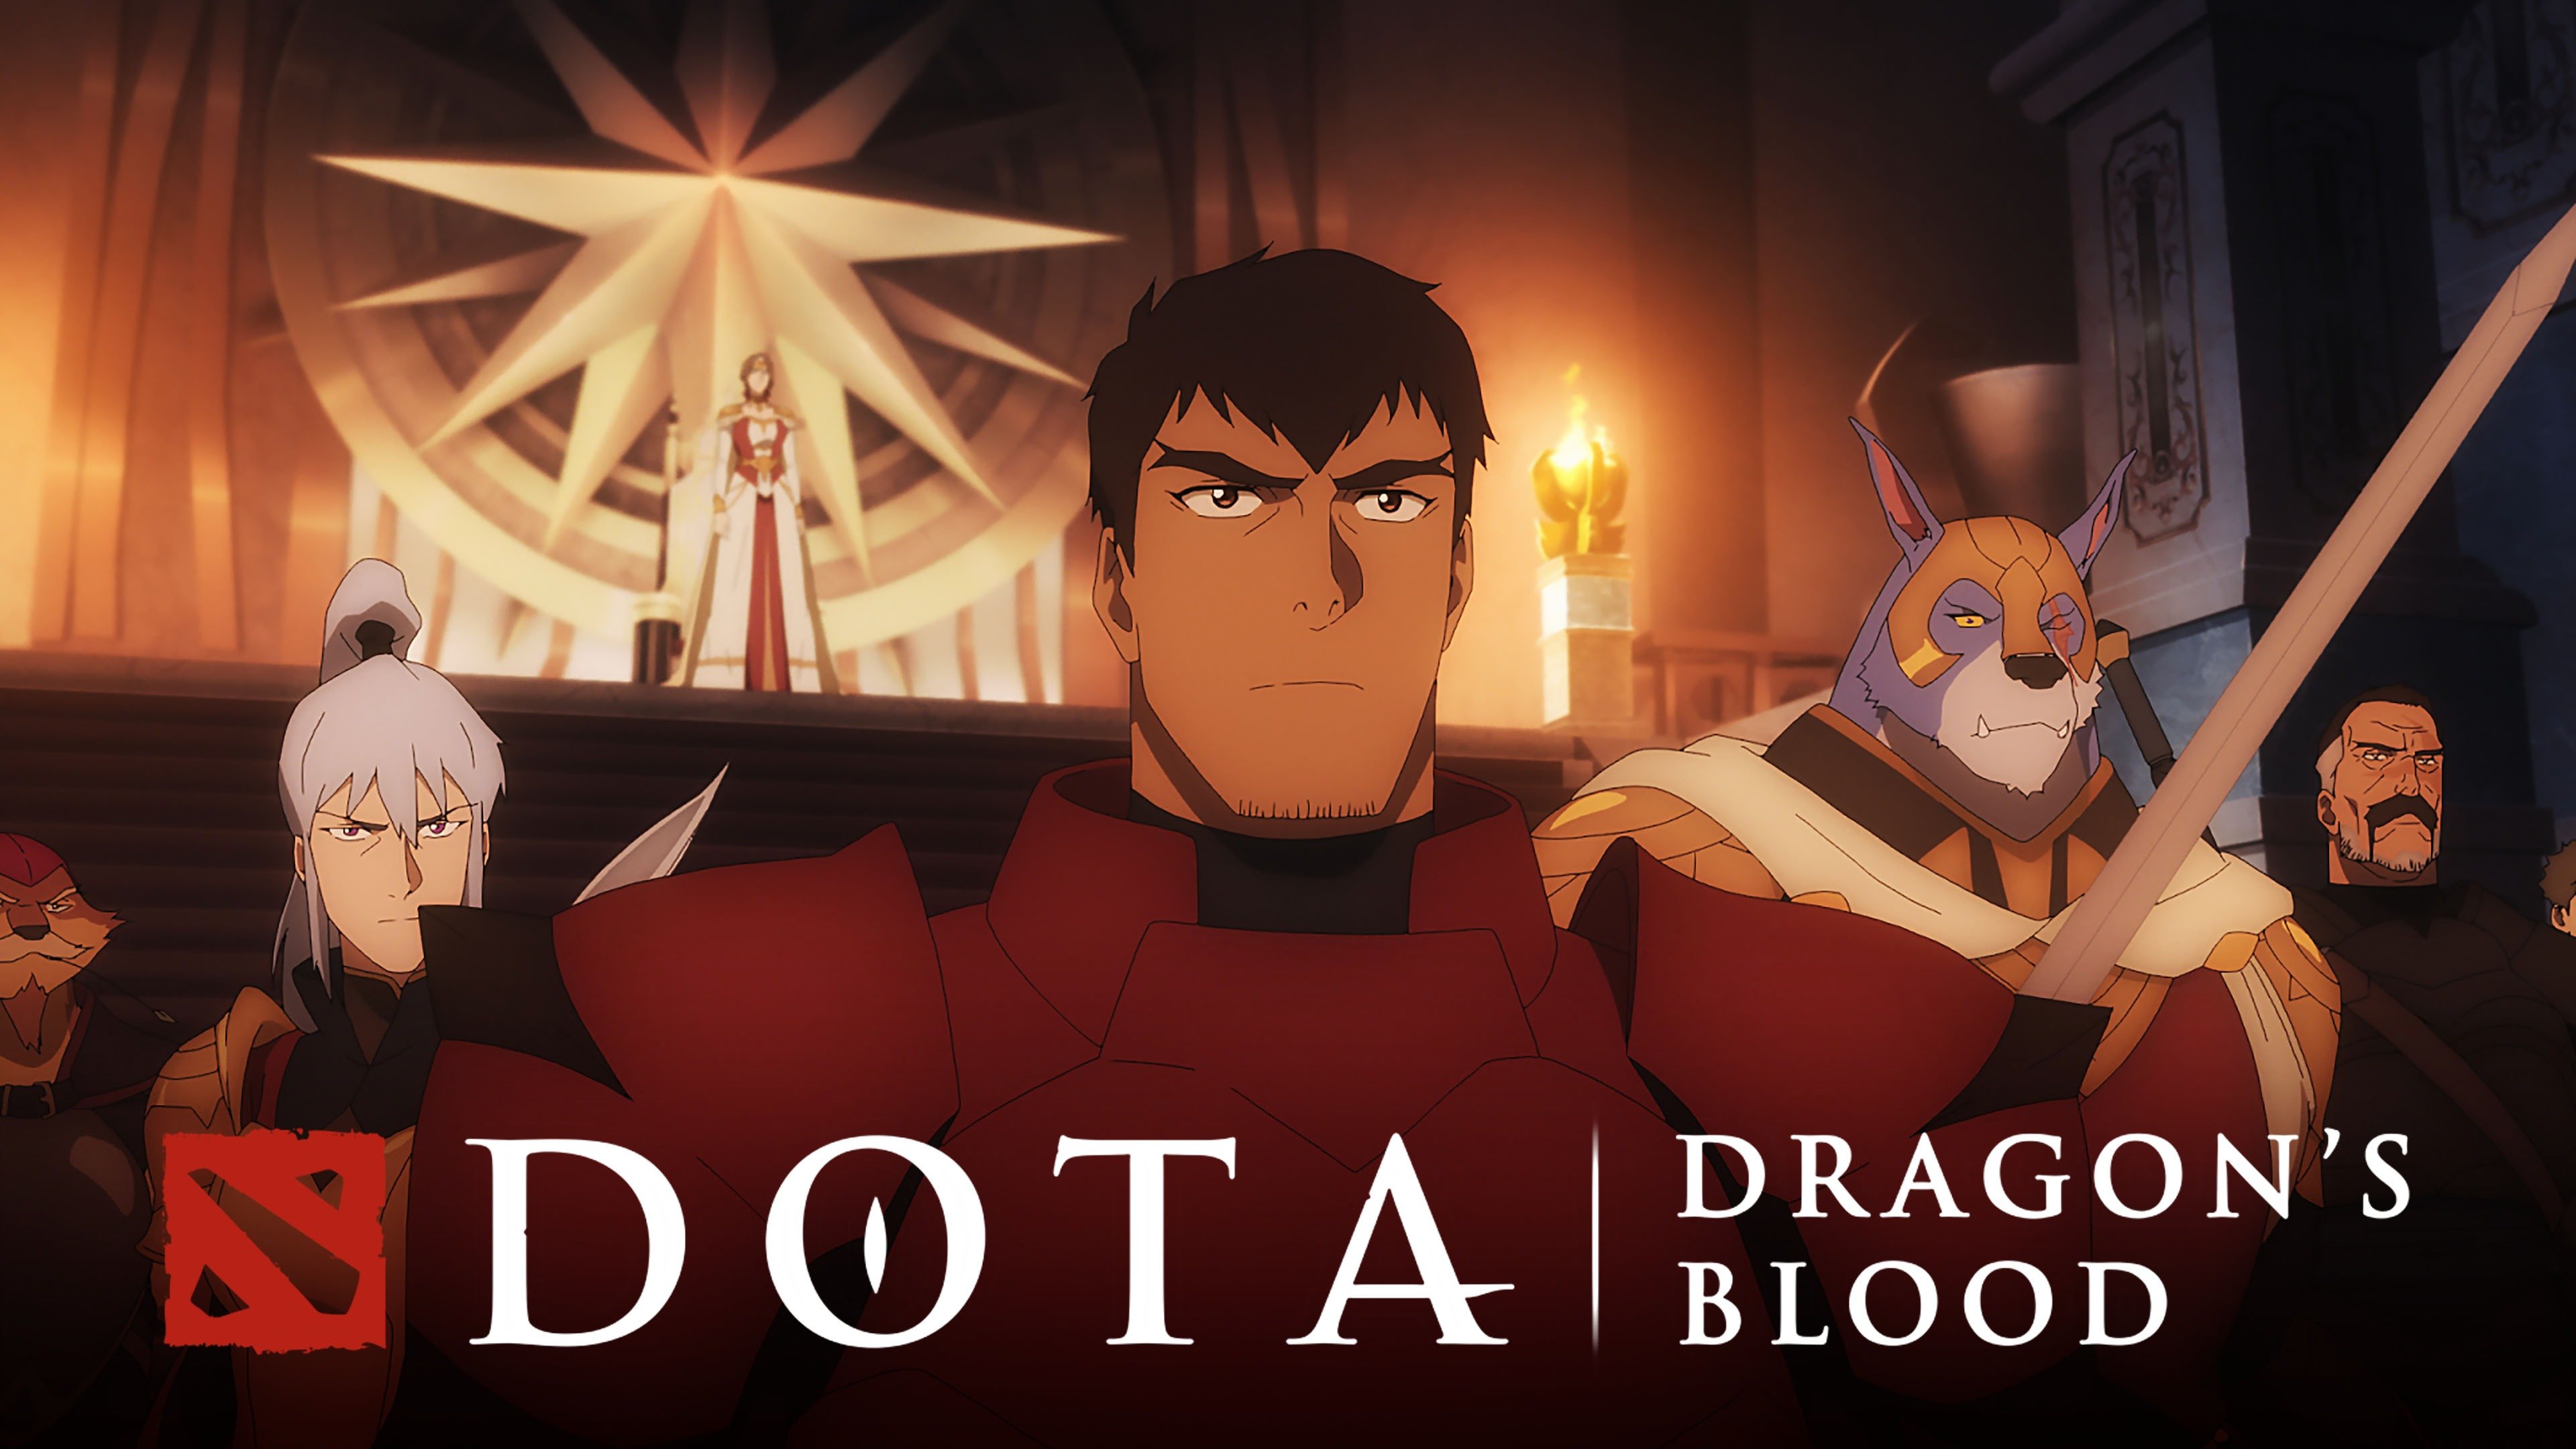 Dota Dragon's Blood Anime Serie Book 1-2 Episodes 16 Dual Audio  English/Japanese | eBay